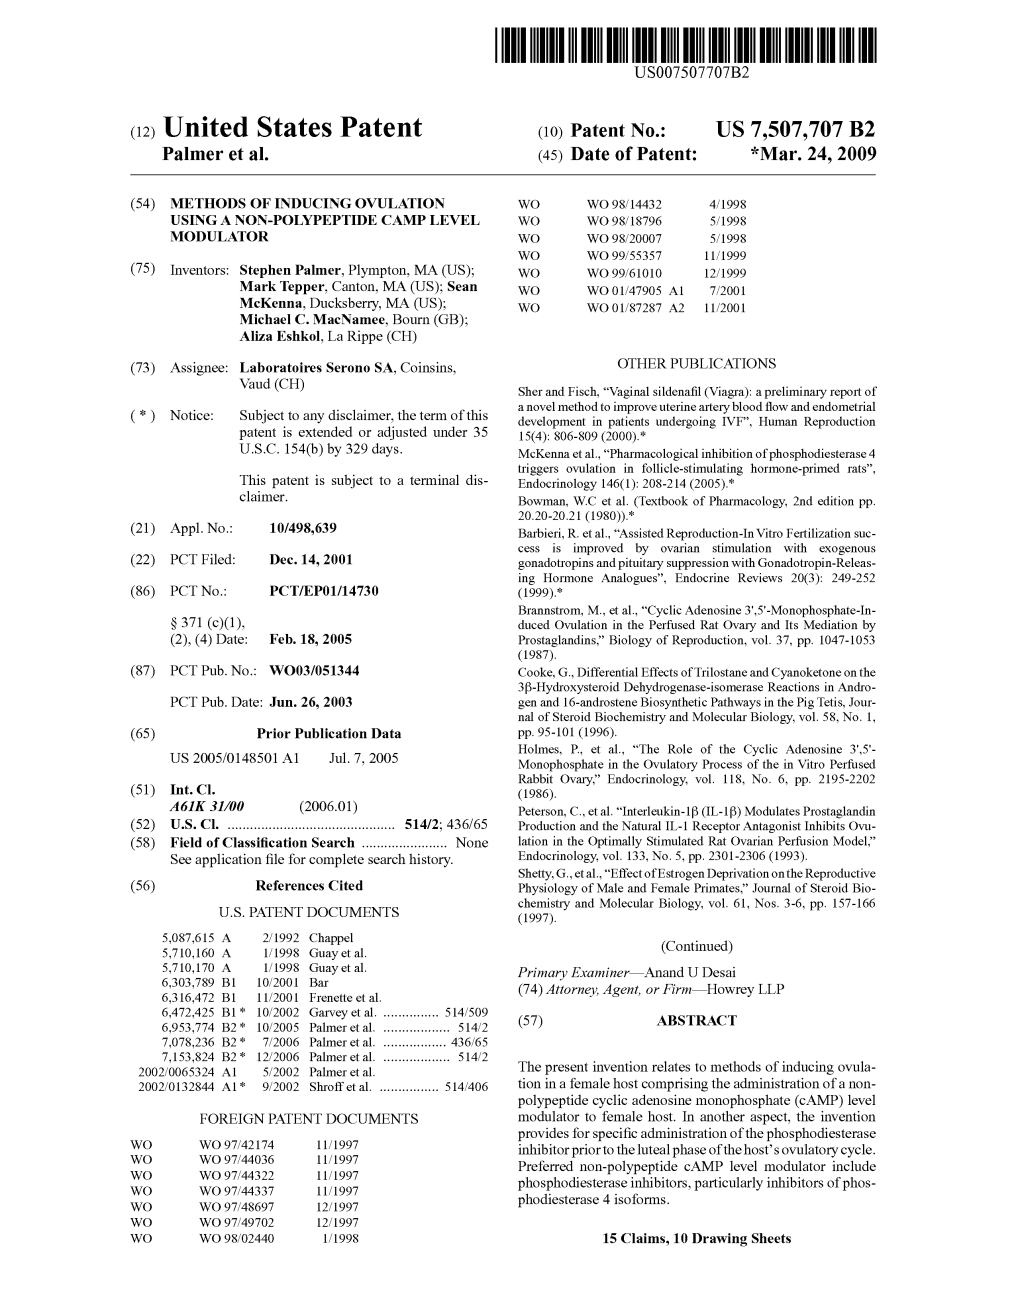 (12) United States Patent (10) Patent No.: US 7,507,707 B2 Palmer Et Al